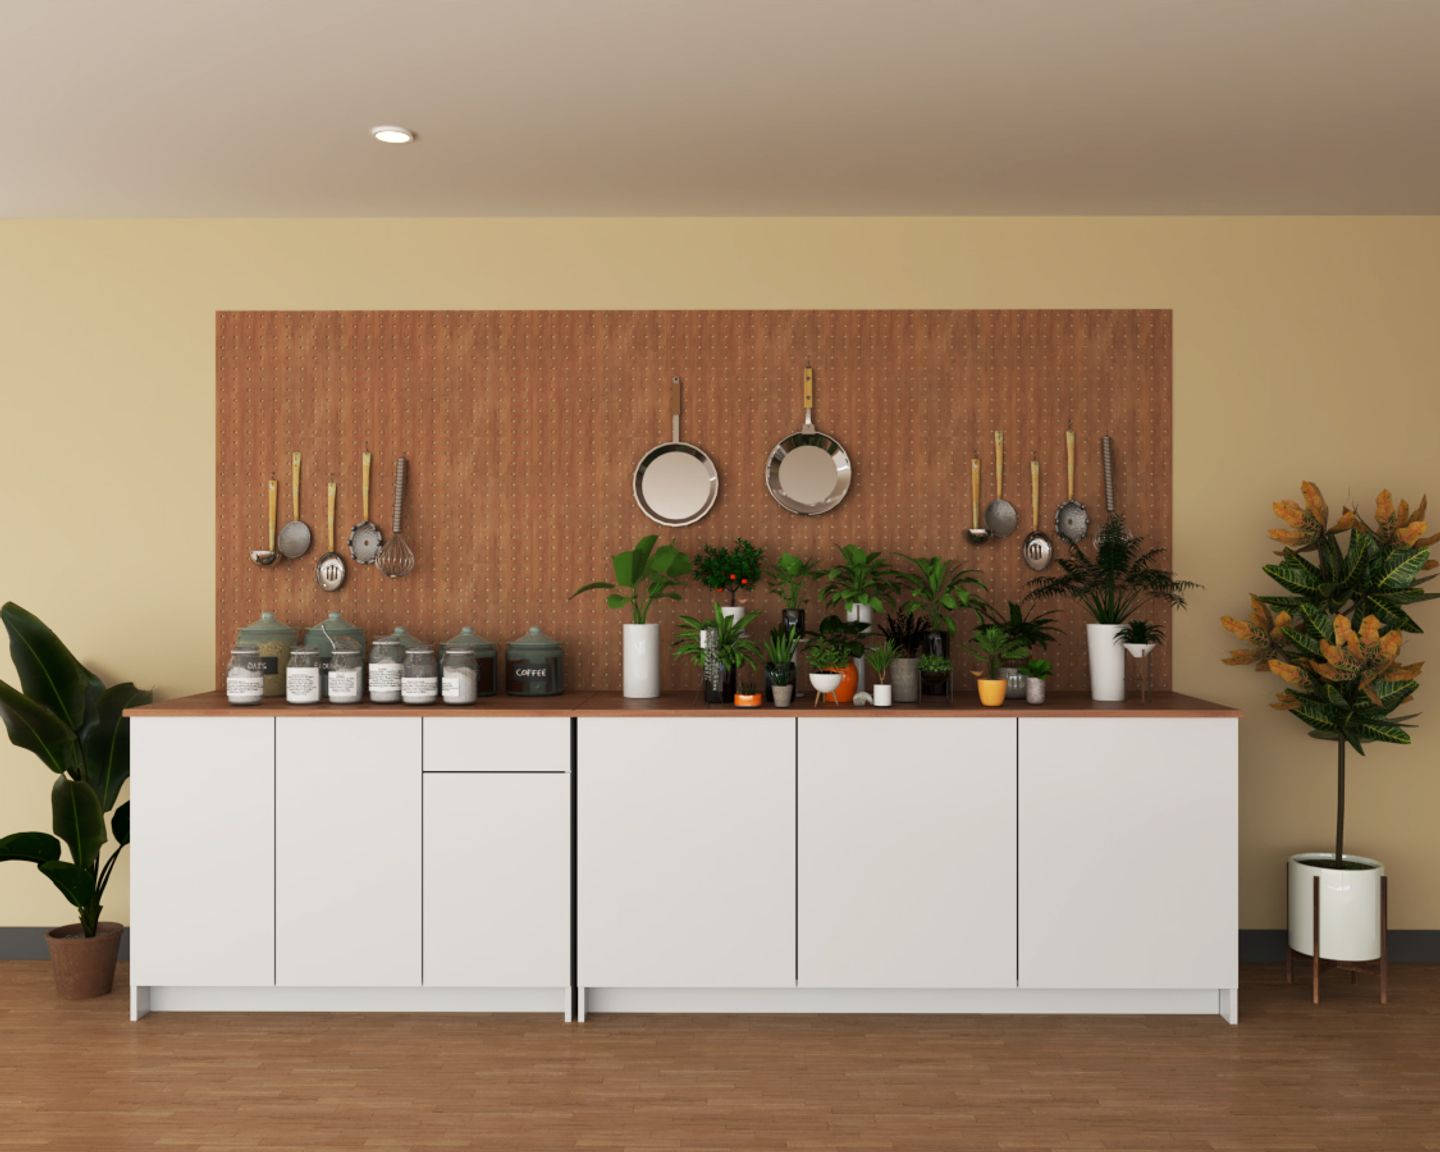 White Kitchen Design With A Wooden Backsplash - Livspace